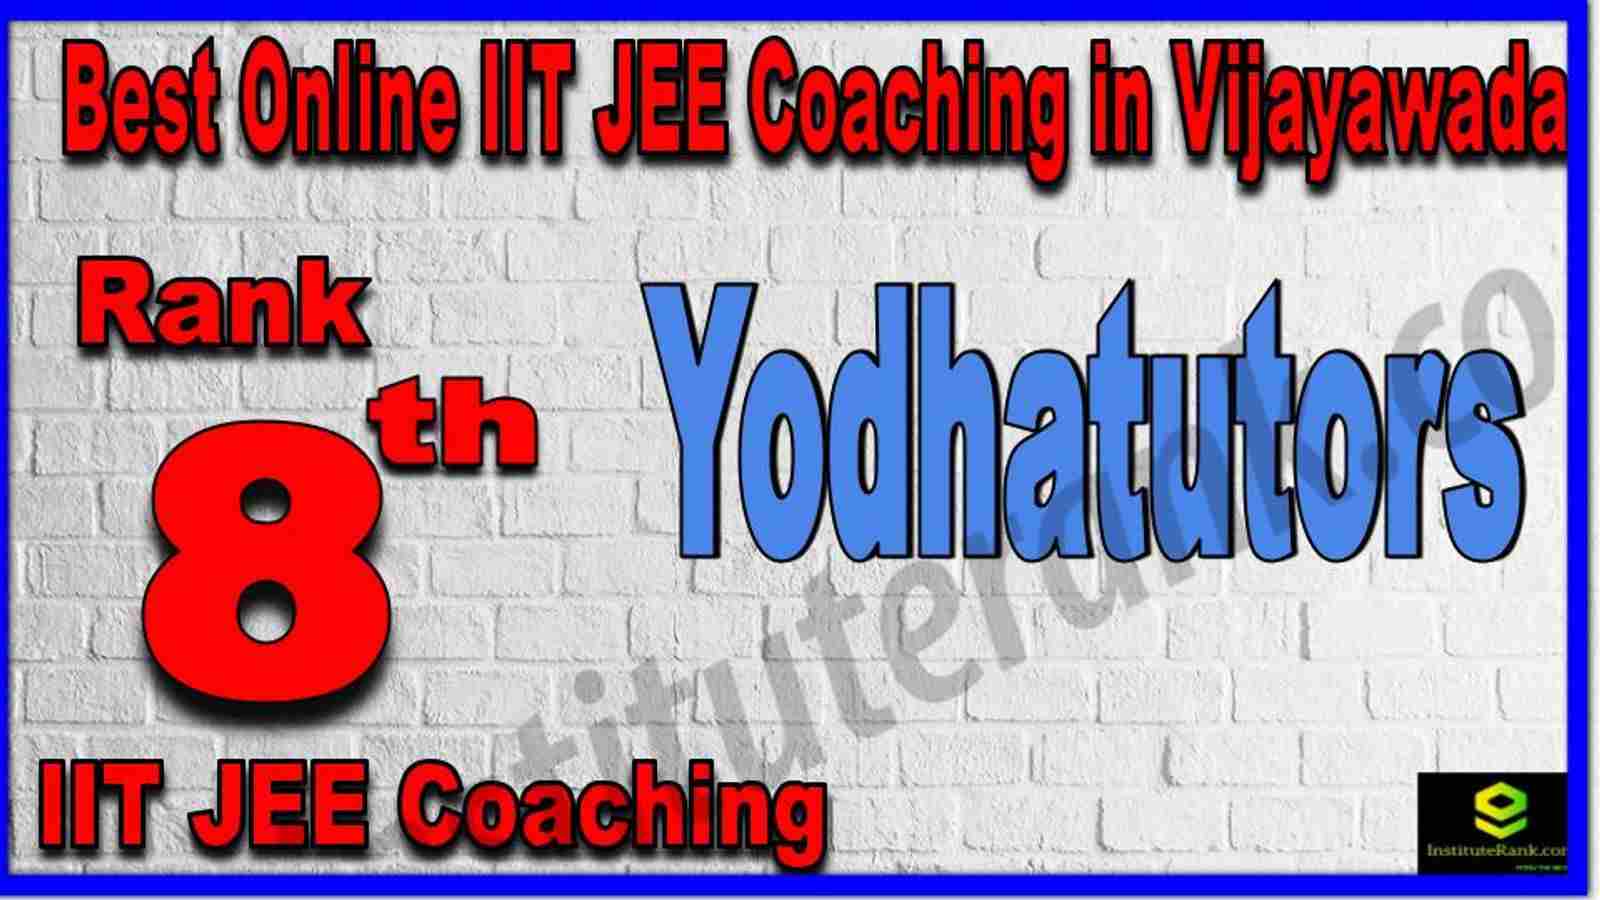 Rank 8th Best Online IIT JEE Coaching in Vijayawada